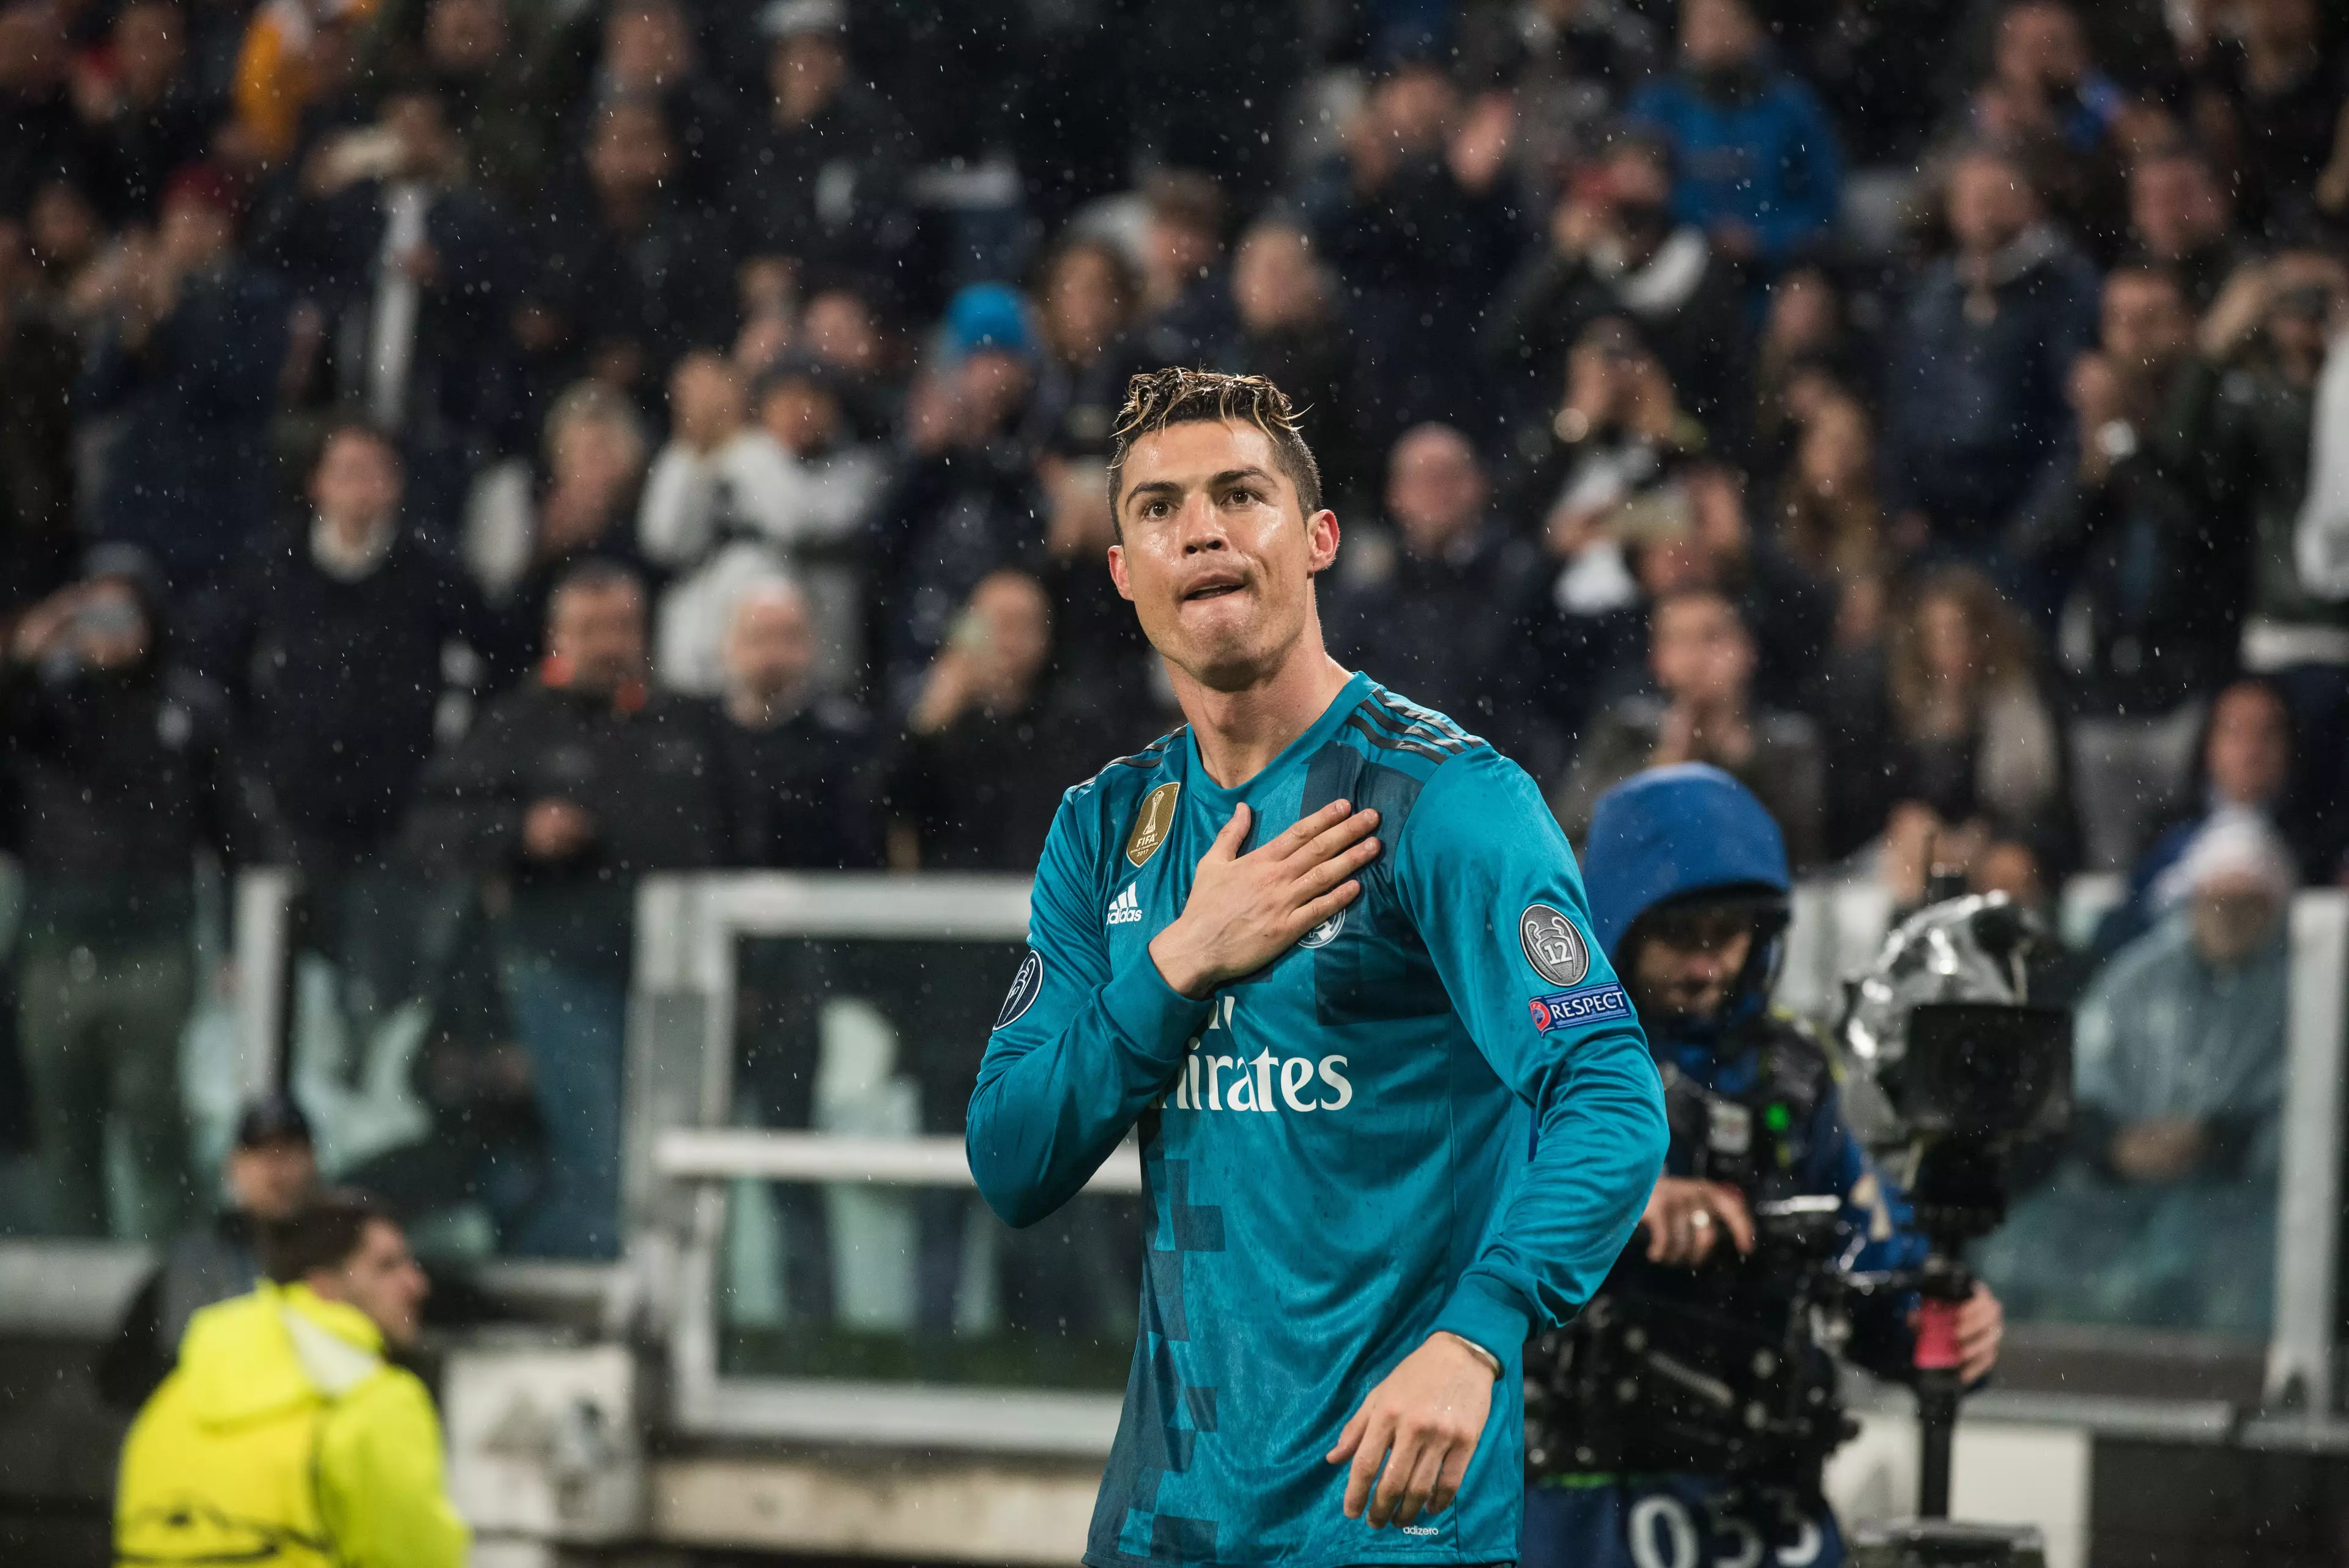 Ronaldo gestures to the Juventus fans. Image: PA